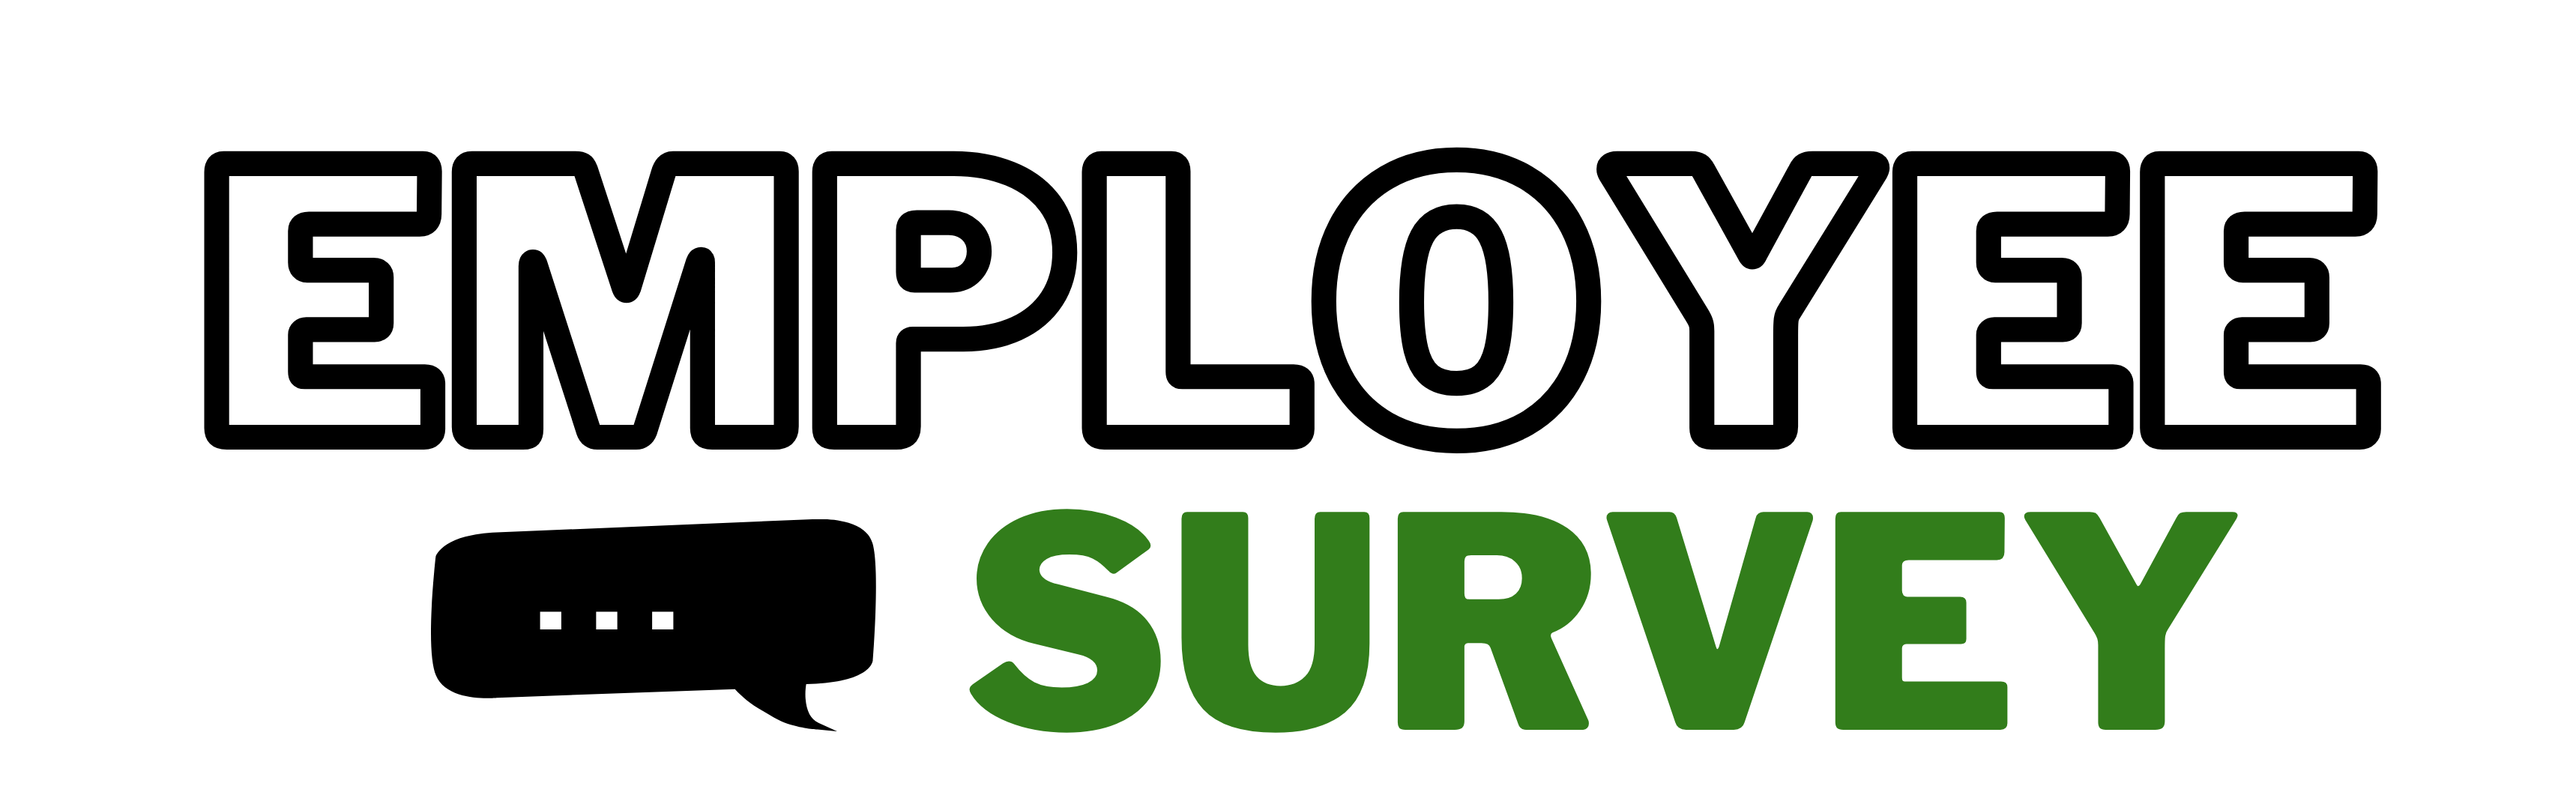 Employee Survey logo